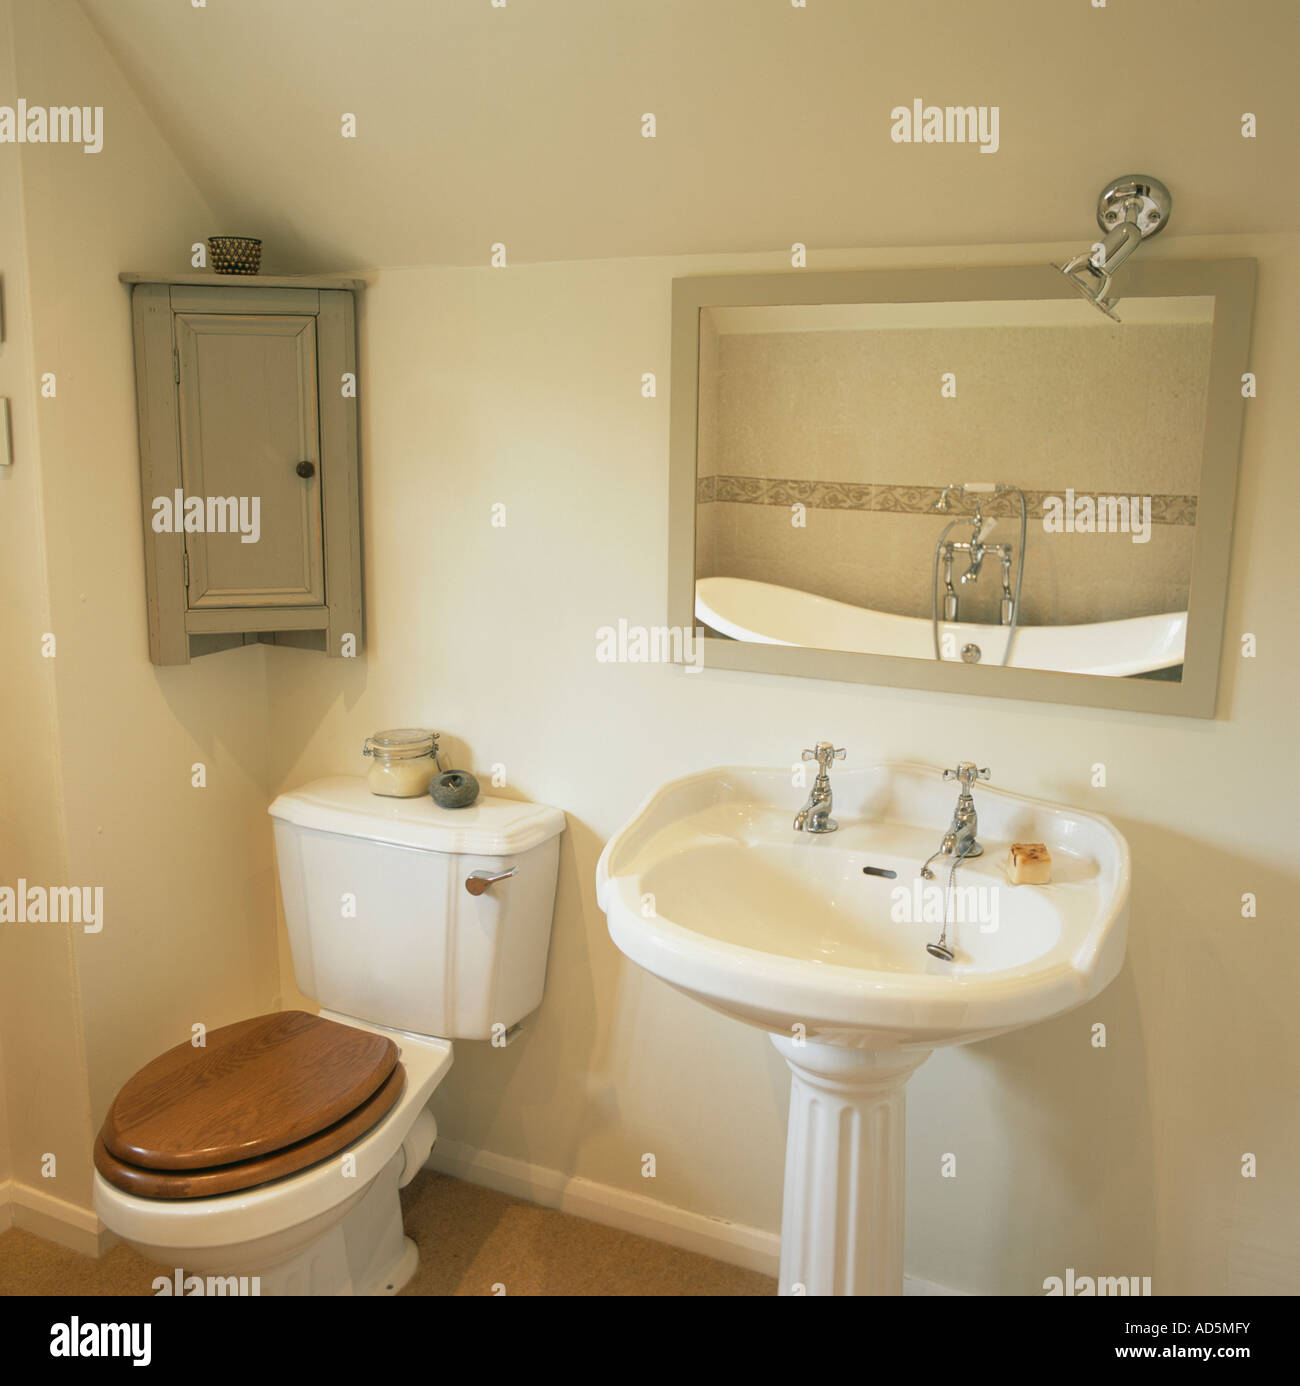 Toilet And Pedestal Basin Below Mirror In Traditional Cream Bathroom Stock Photo Alamy